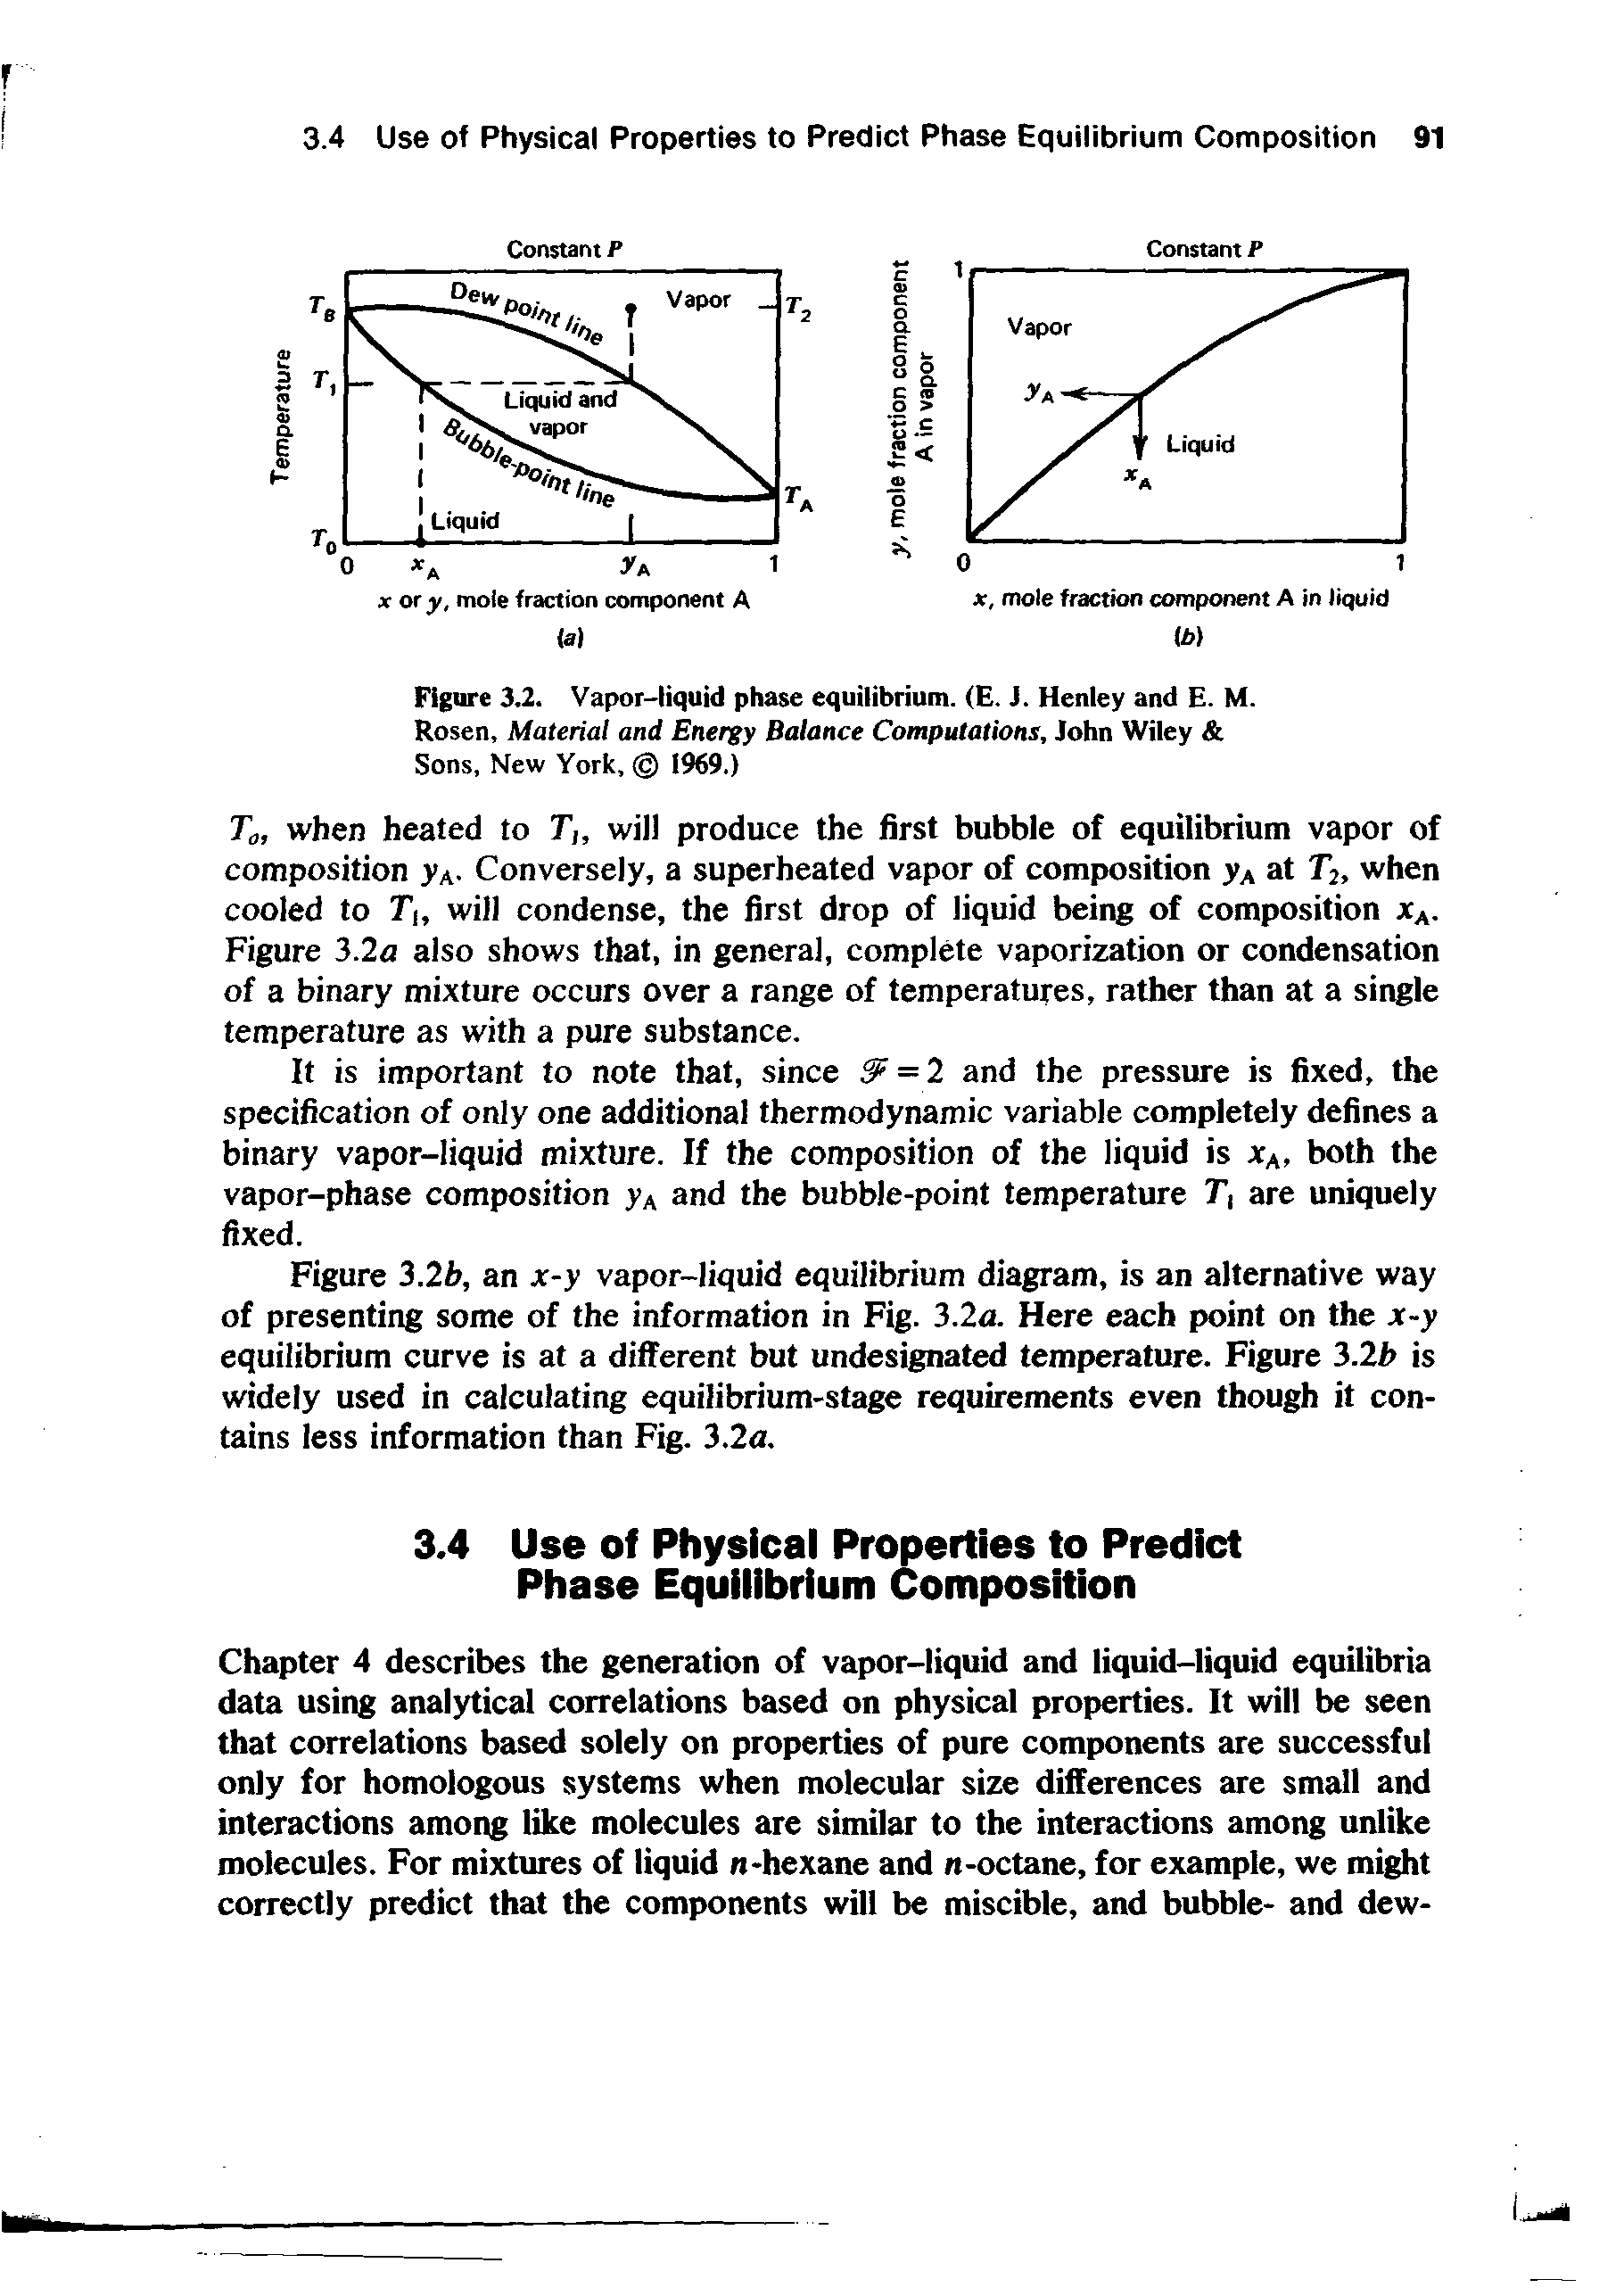 Figure 3.2. Vapor-liquid phase equilibrium. (E. J. Henley and E. M.